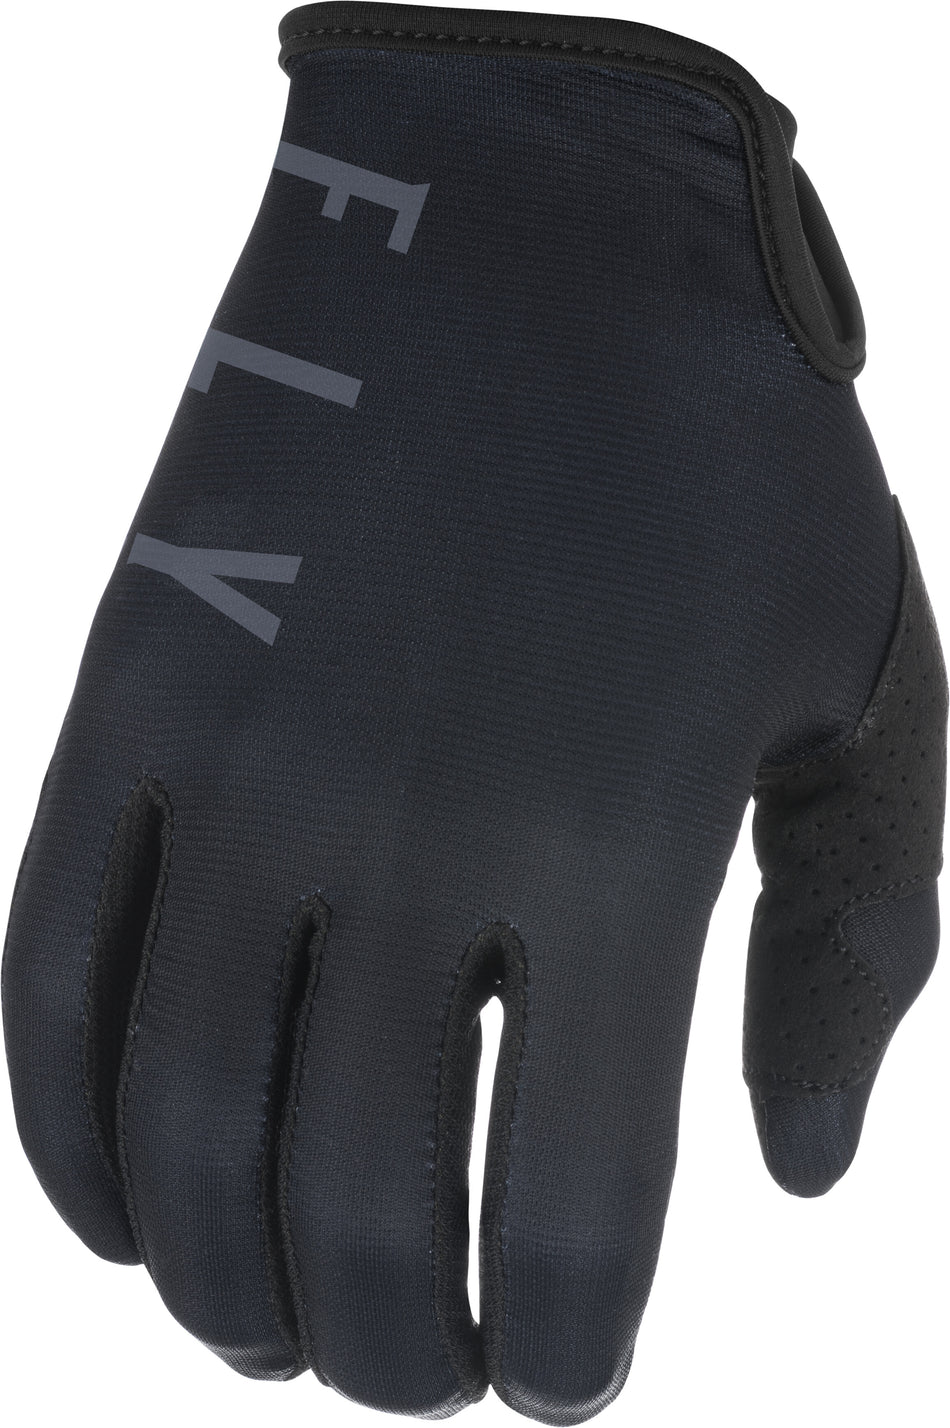 FLY RACING Lite Gloves Black/Grey Sz 07 374-71007